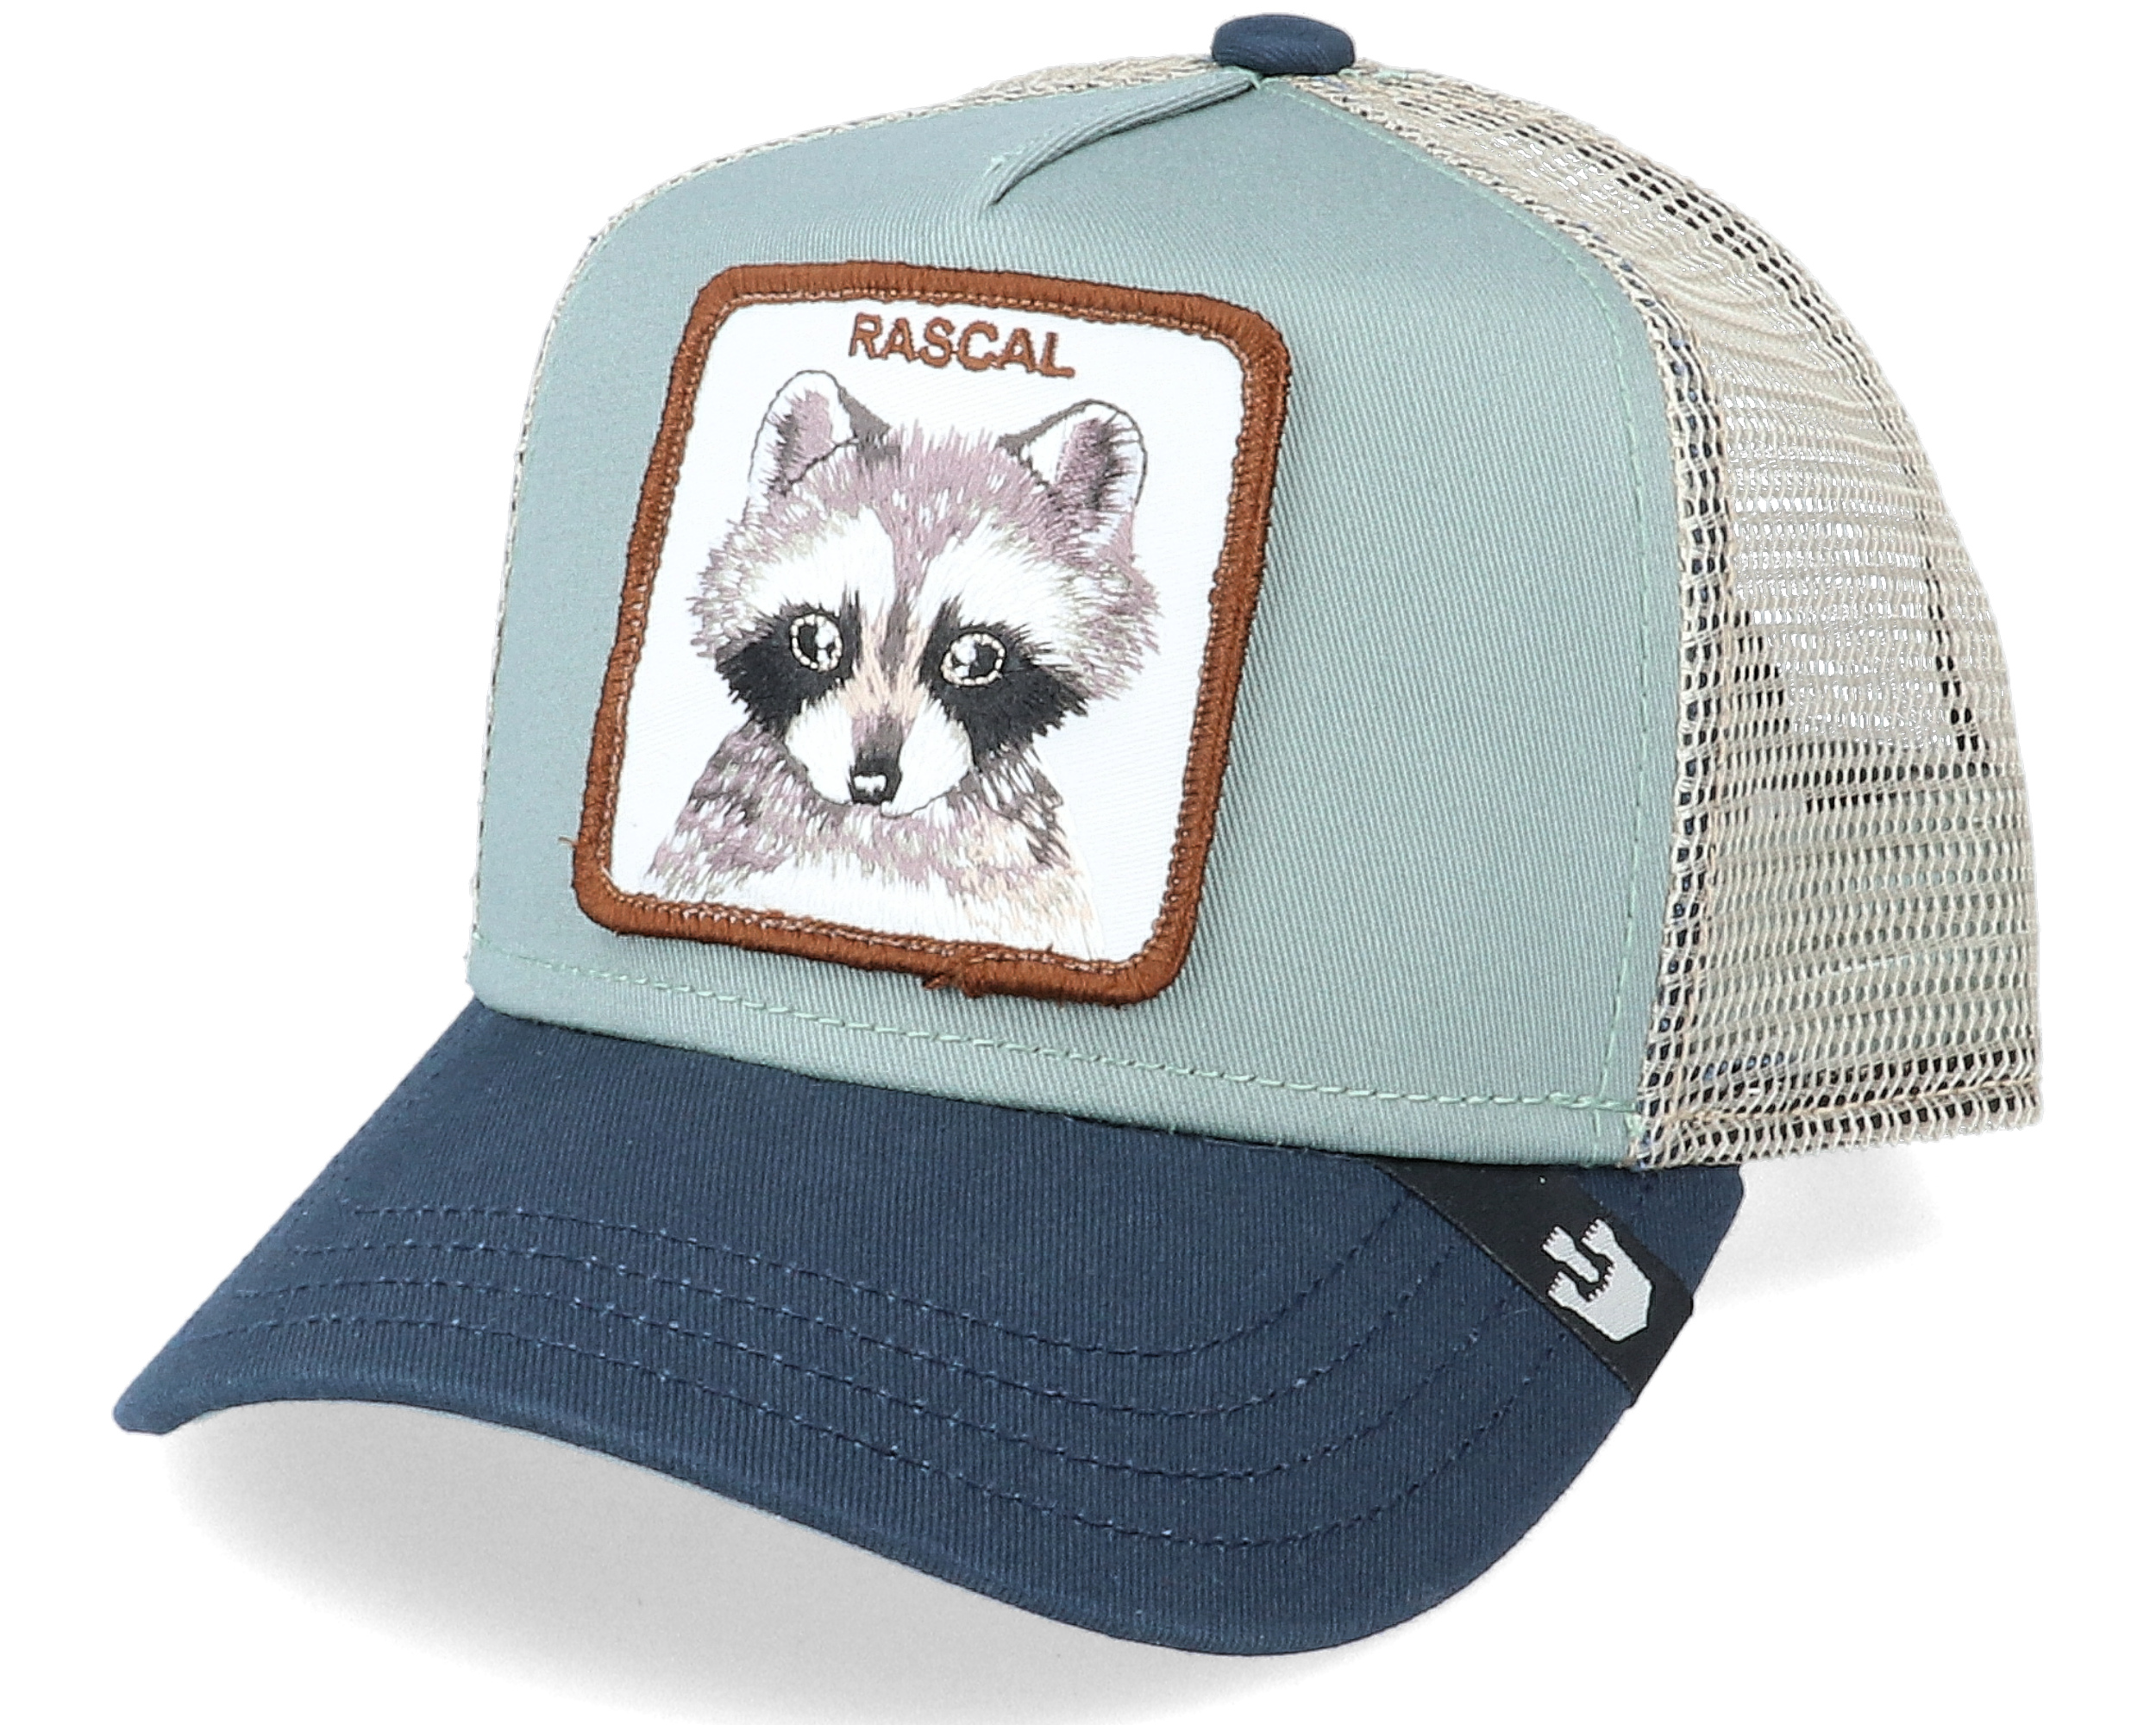 Rascal hat